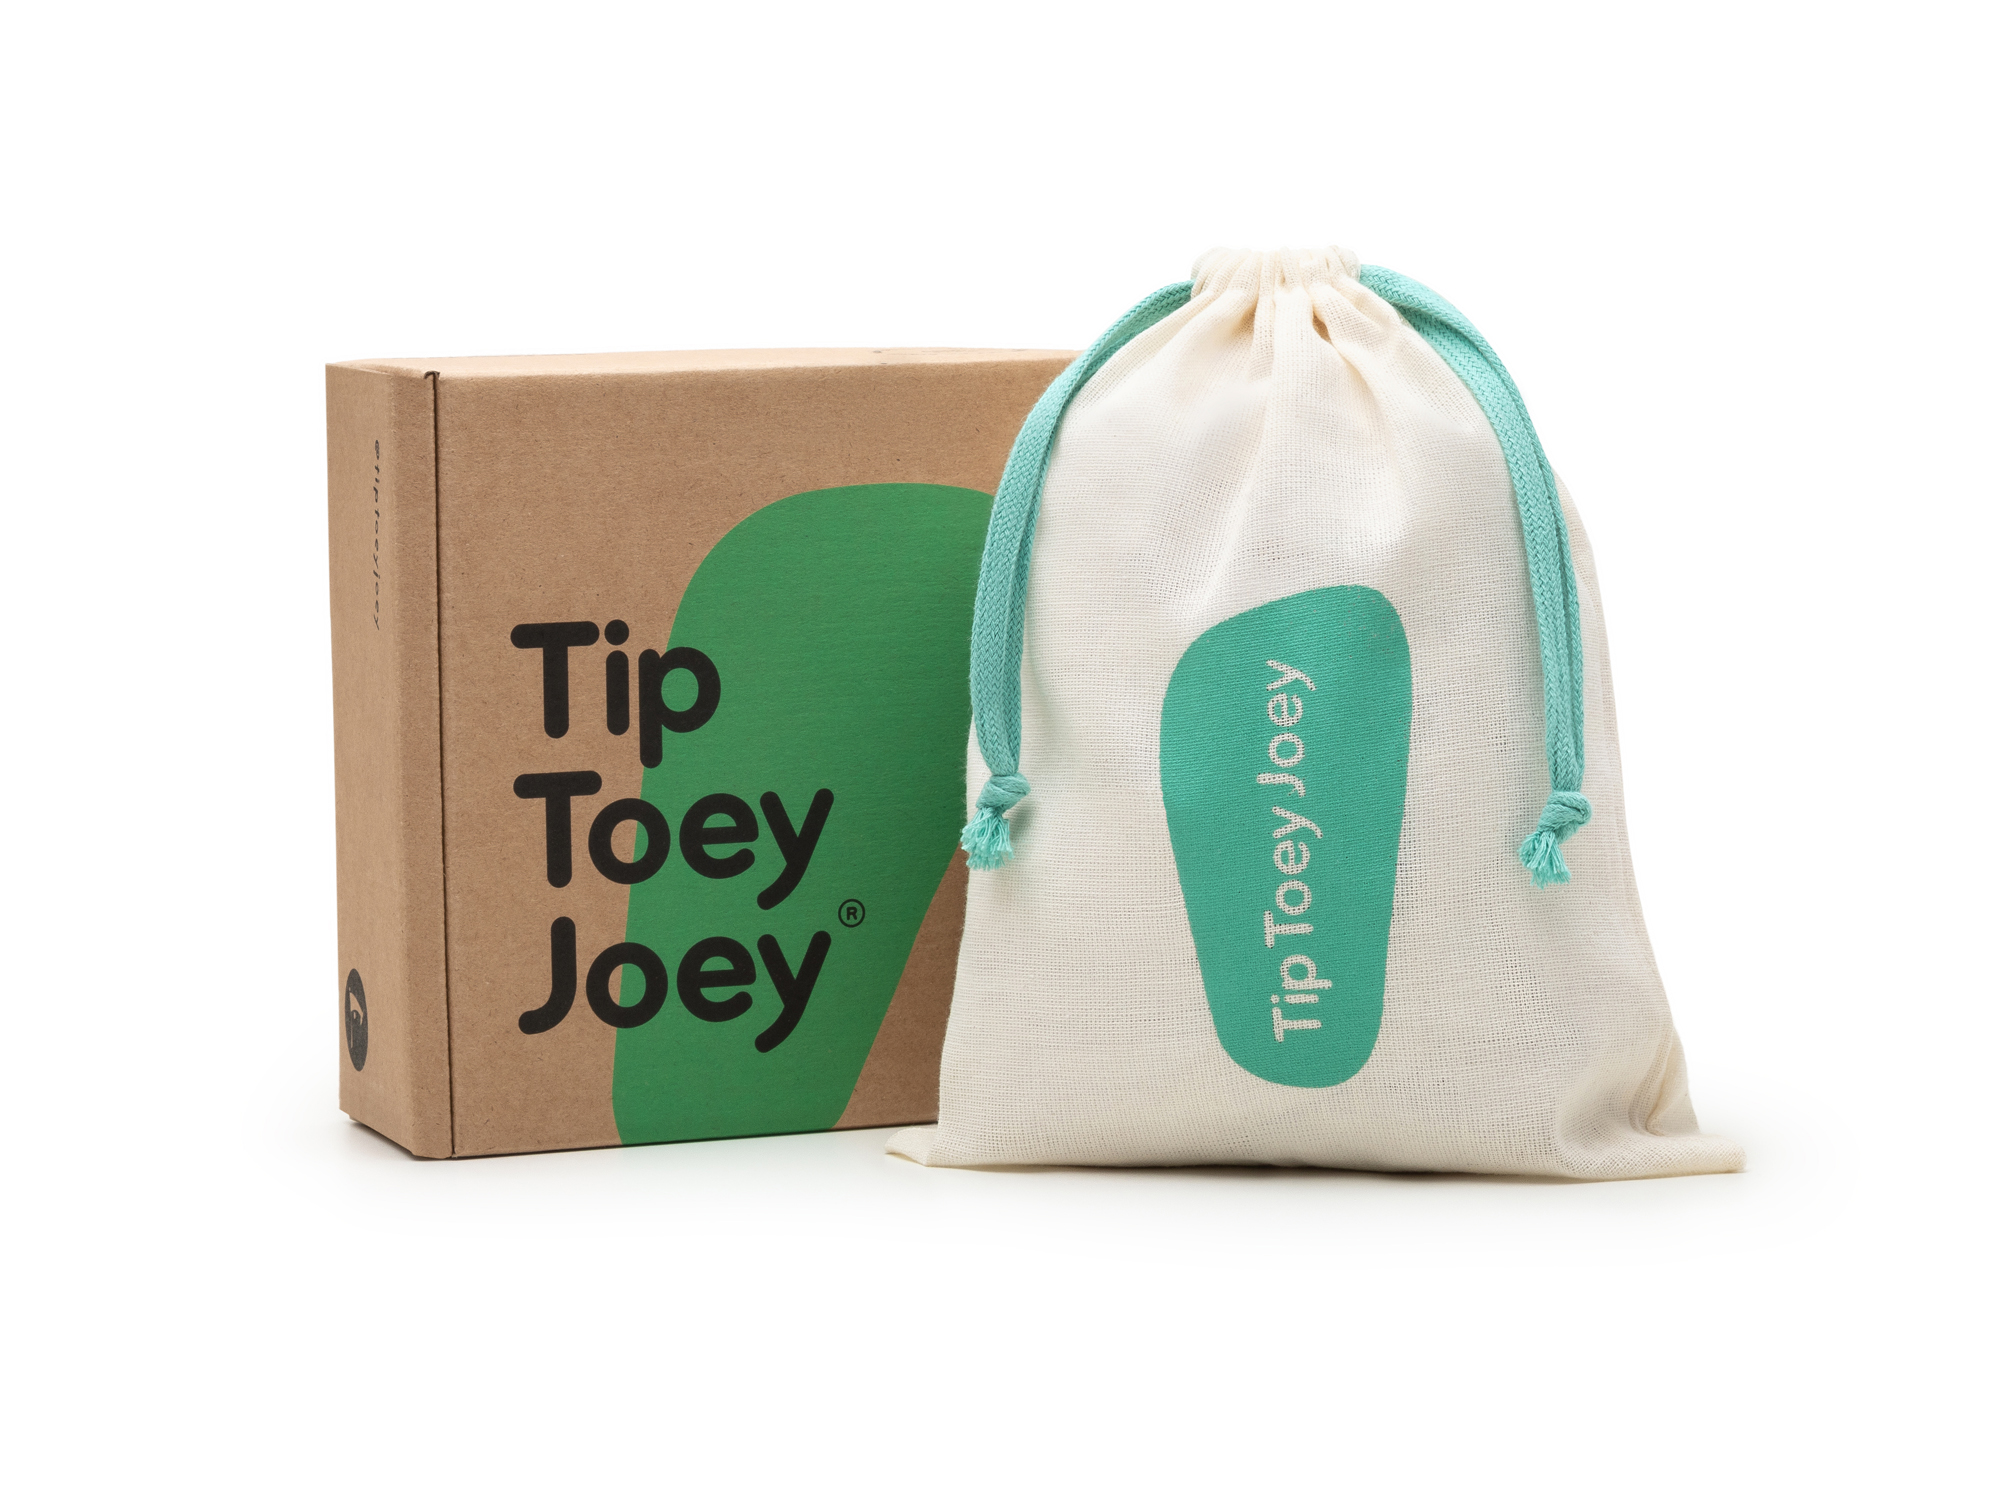 UP & GO Sneakers for Boys Landy | Tip Toey Joey - Australia - 6